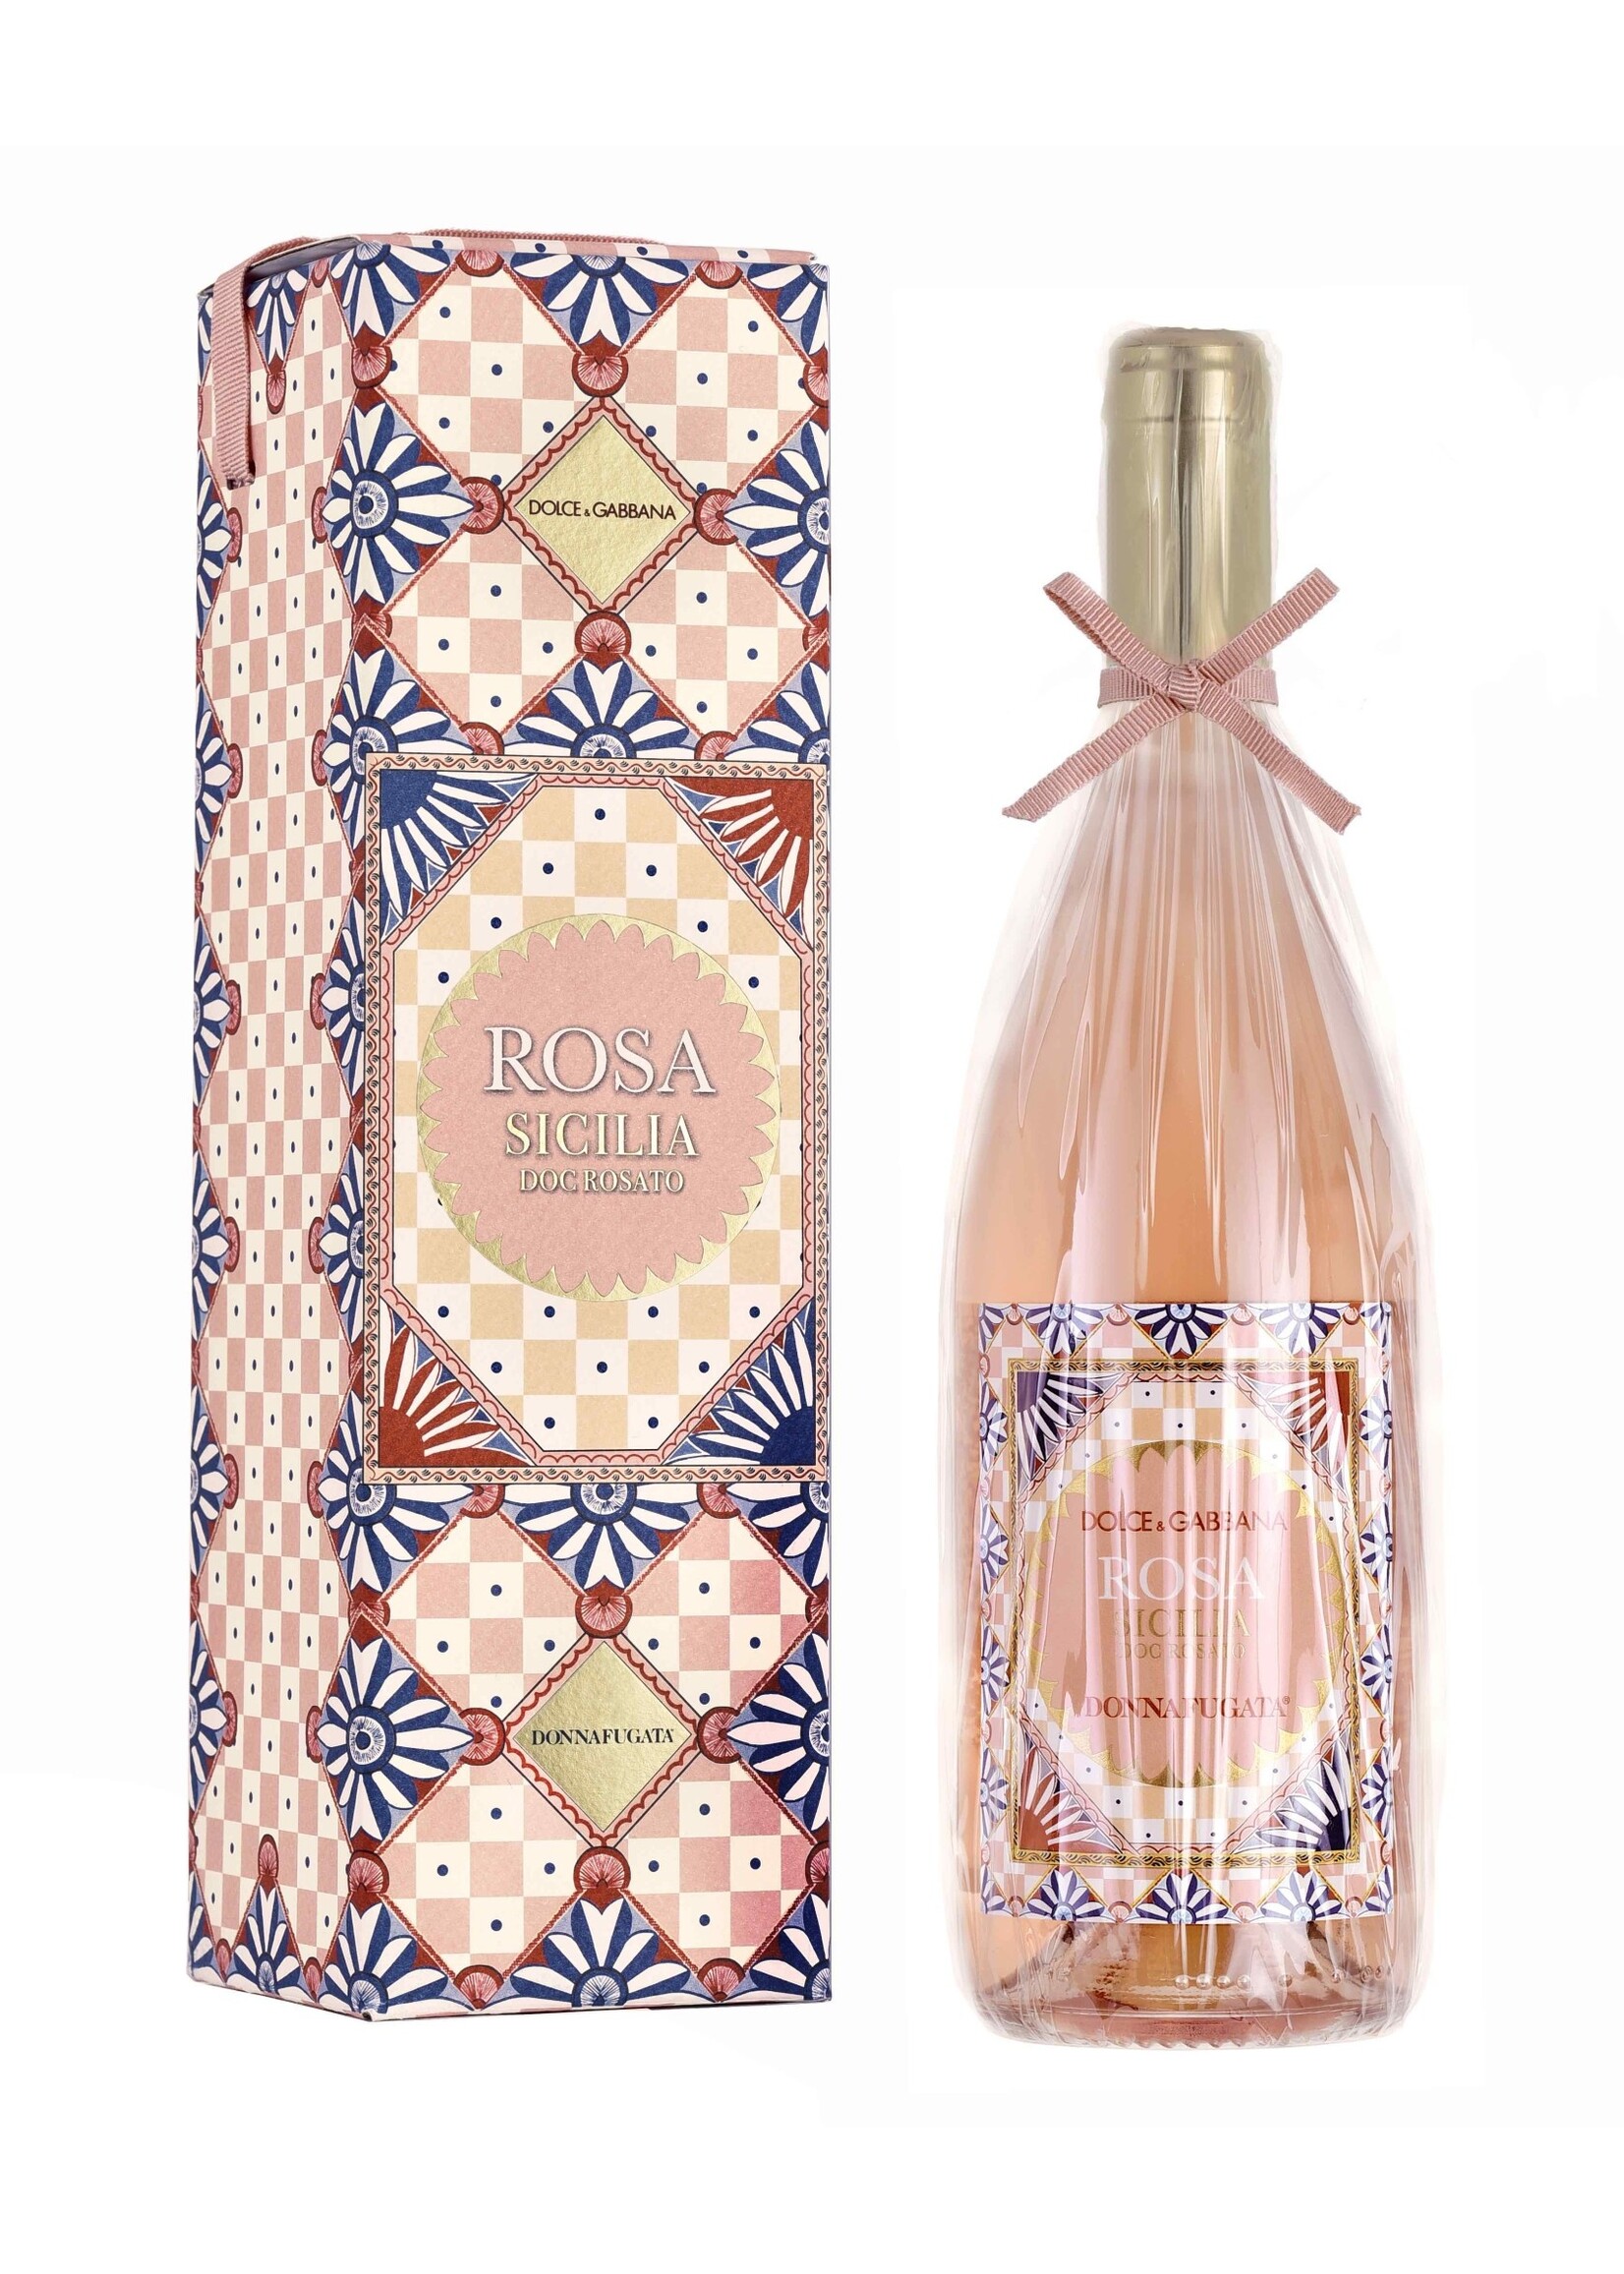 Donnafugata Donnafugata and Dolce & Gabbana Rosa - Rose wine with Gift Box